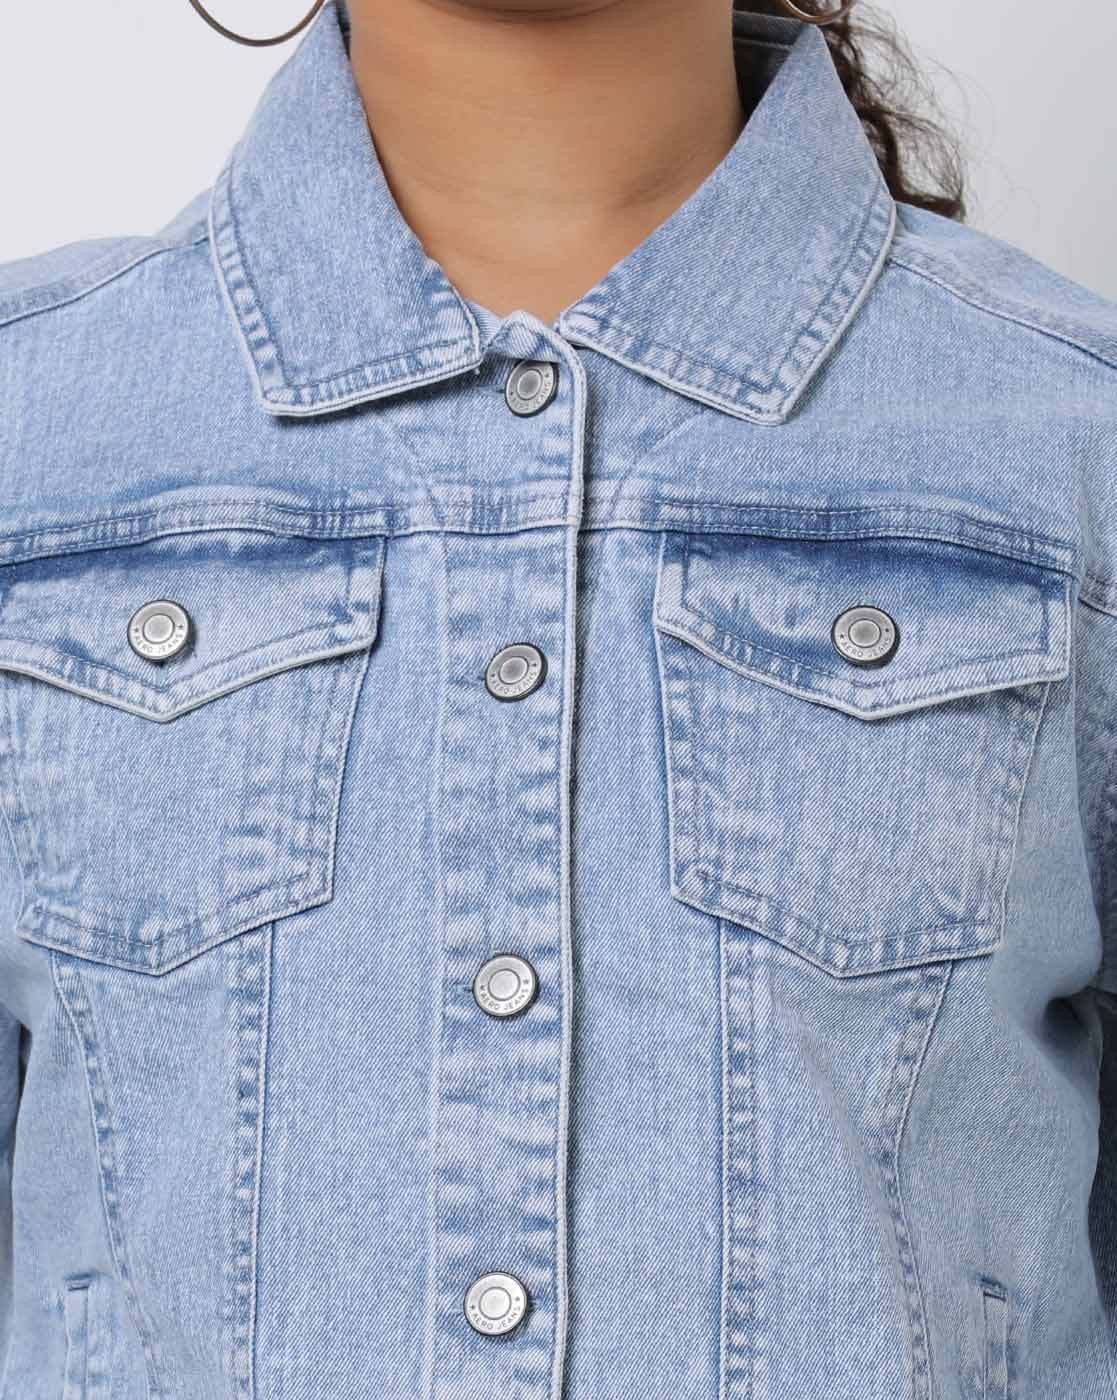 Clo Clu Dark Blue Rough Look Denim Summer Jacket at Rs 390/piece in New  Delhi | ID: 12431010691